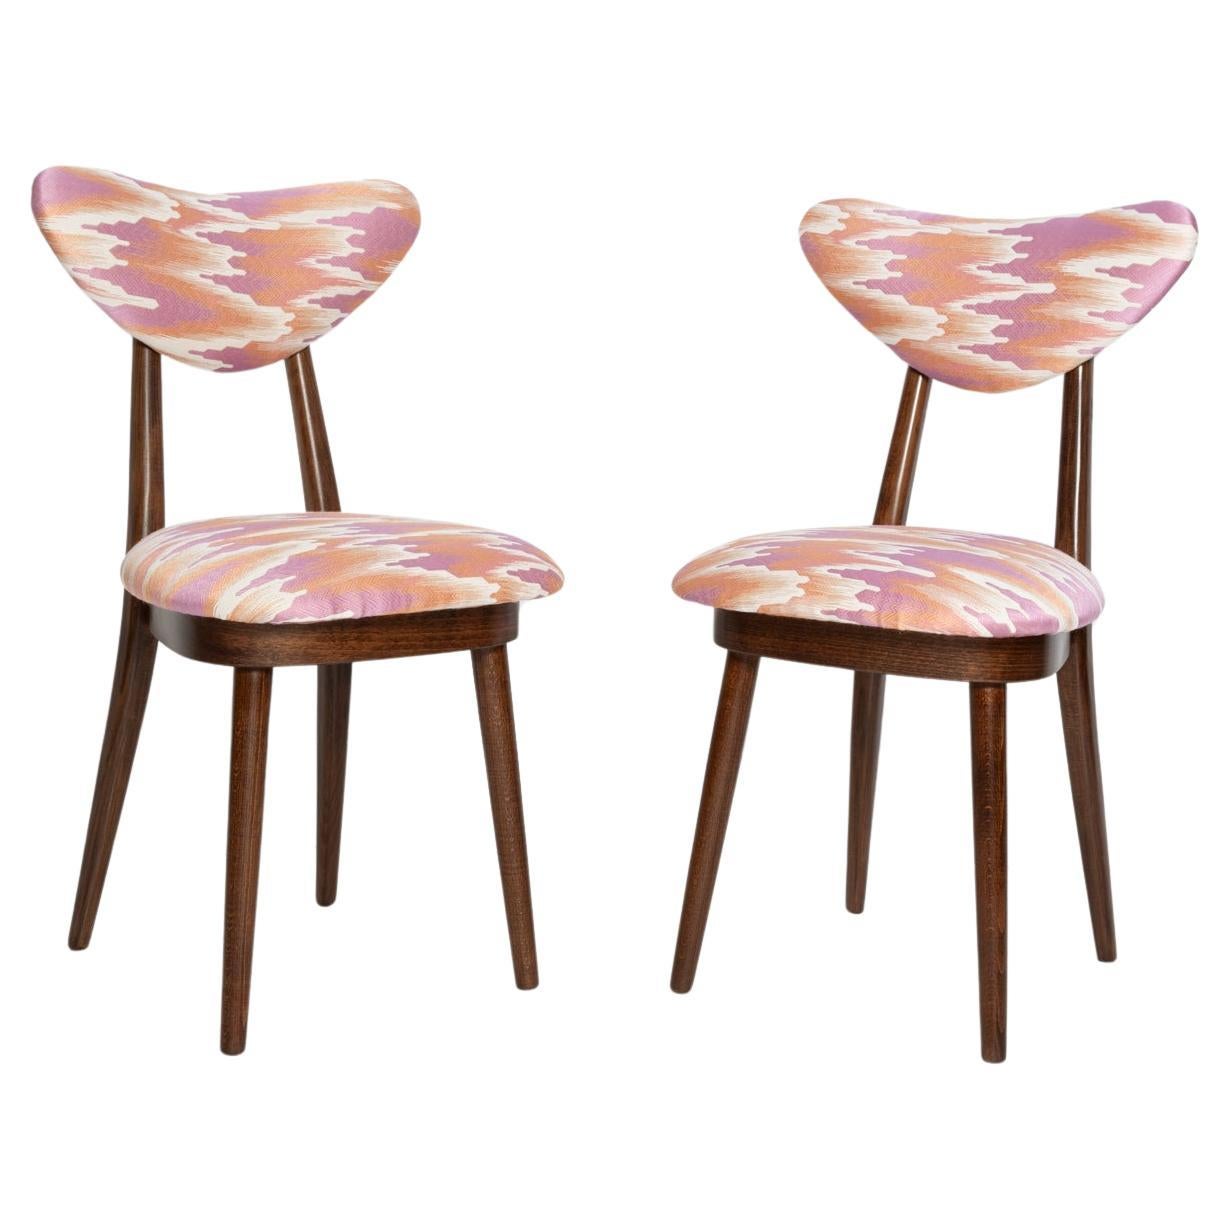 Set of Two MidCentury Heart Chairs, Pink Fandango Jacquar, Dedar, Europe, 1960s